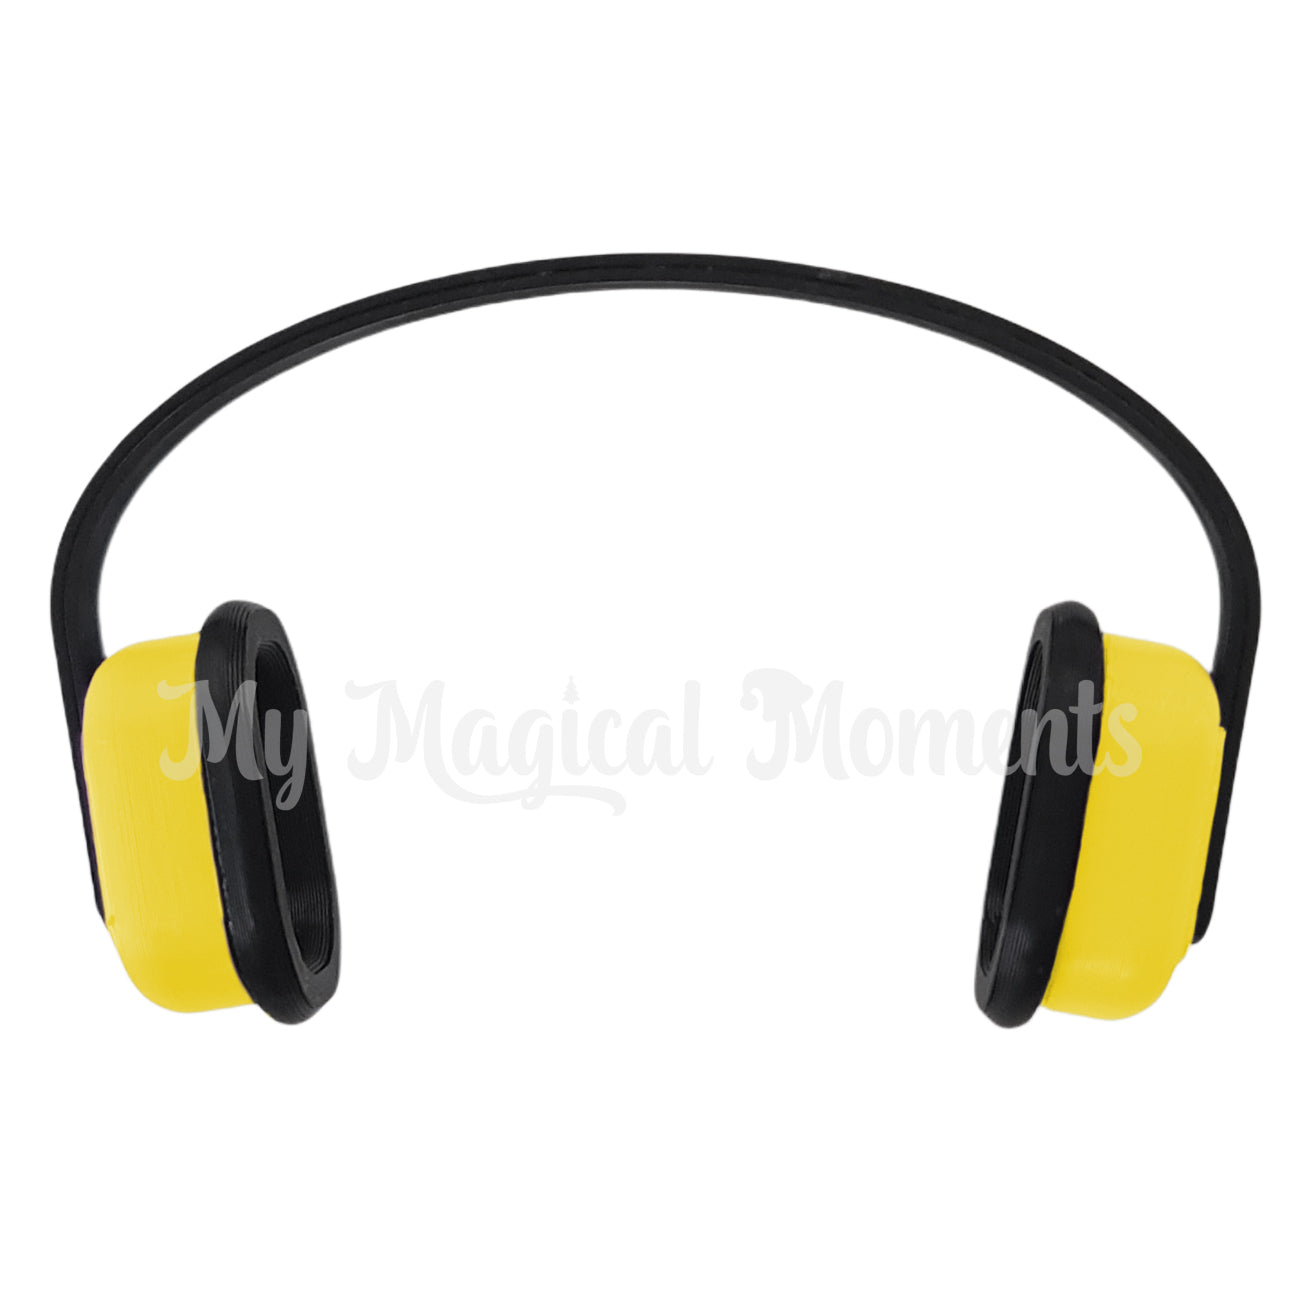 Elf Sized sensory headphones - yellow